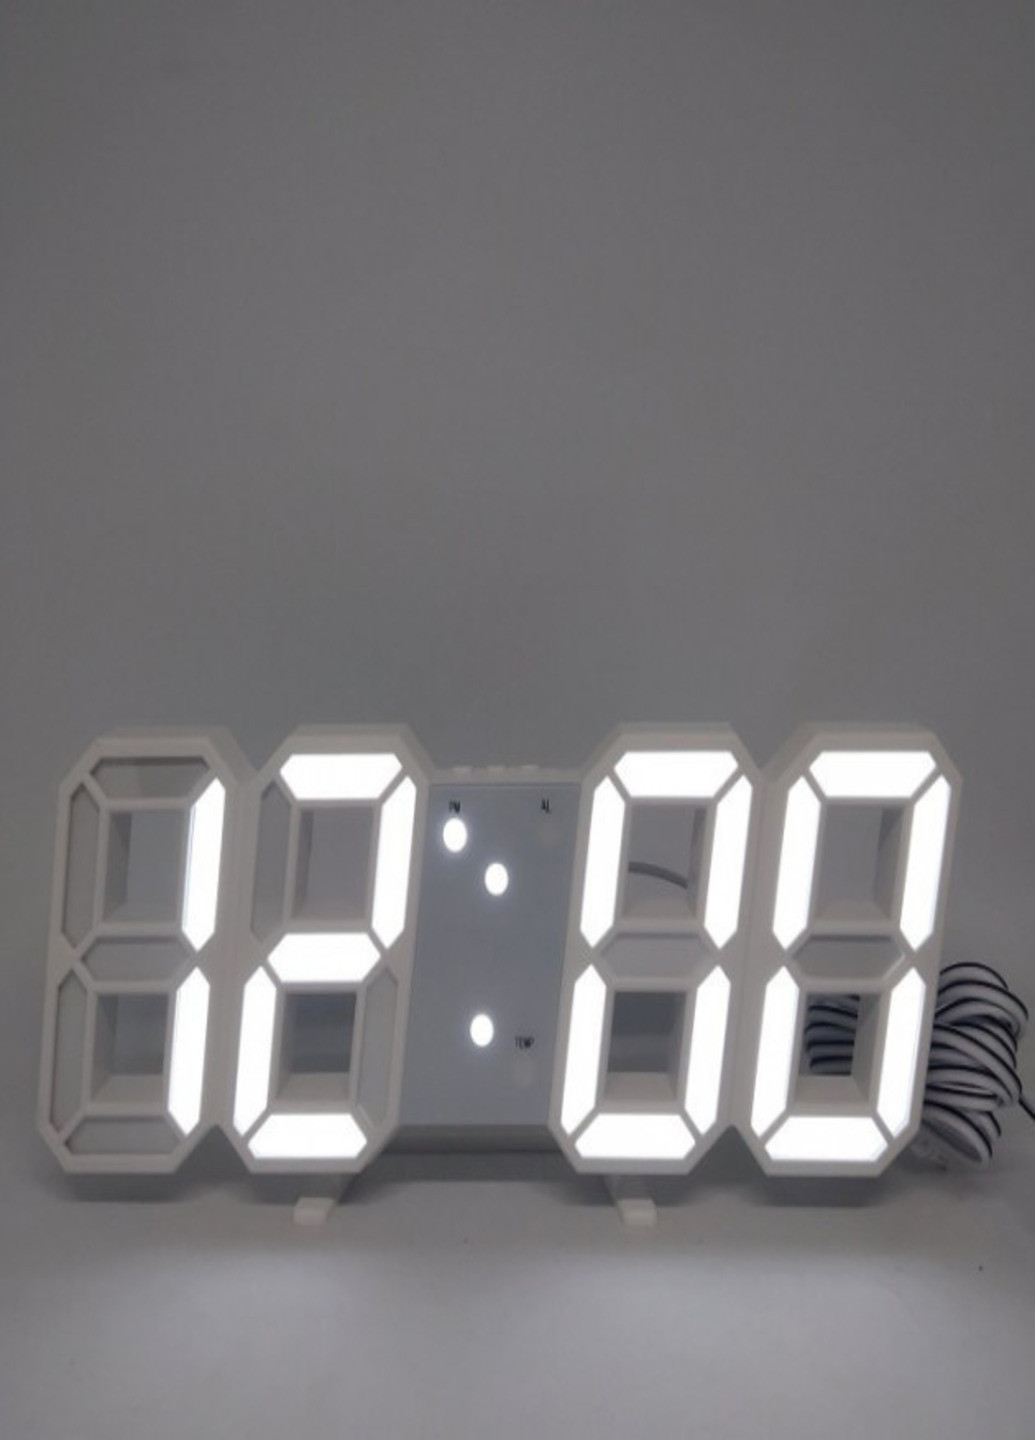 Электронные часы настольные LY 1089 с белой подсветкой VST (253020853)